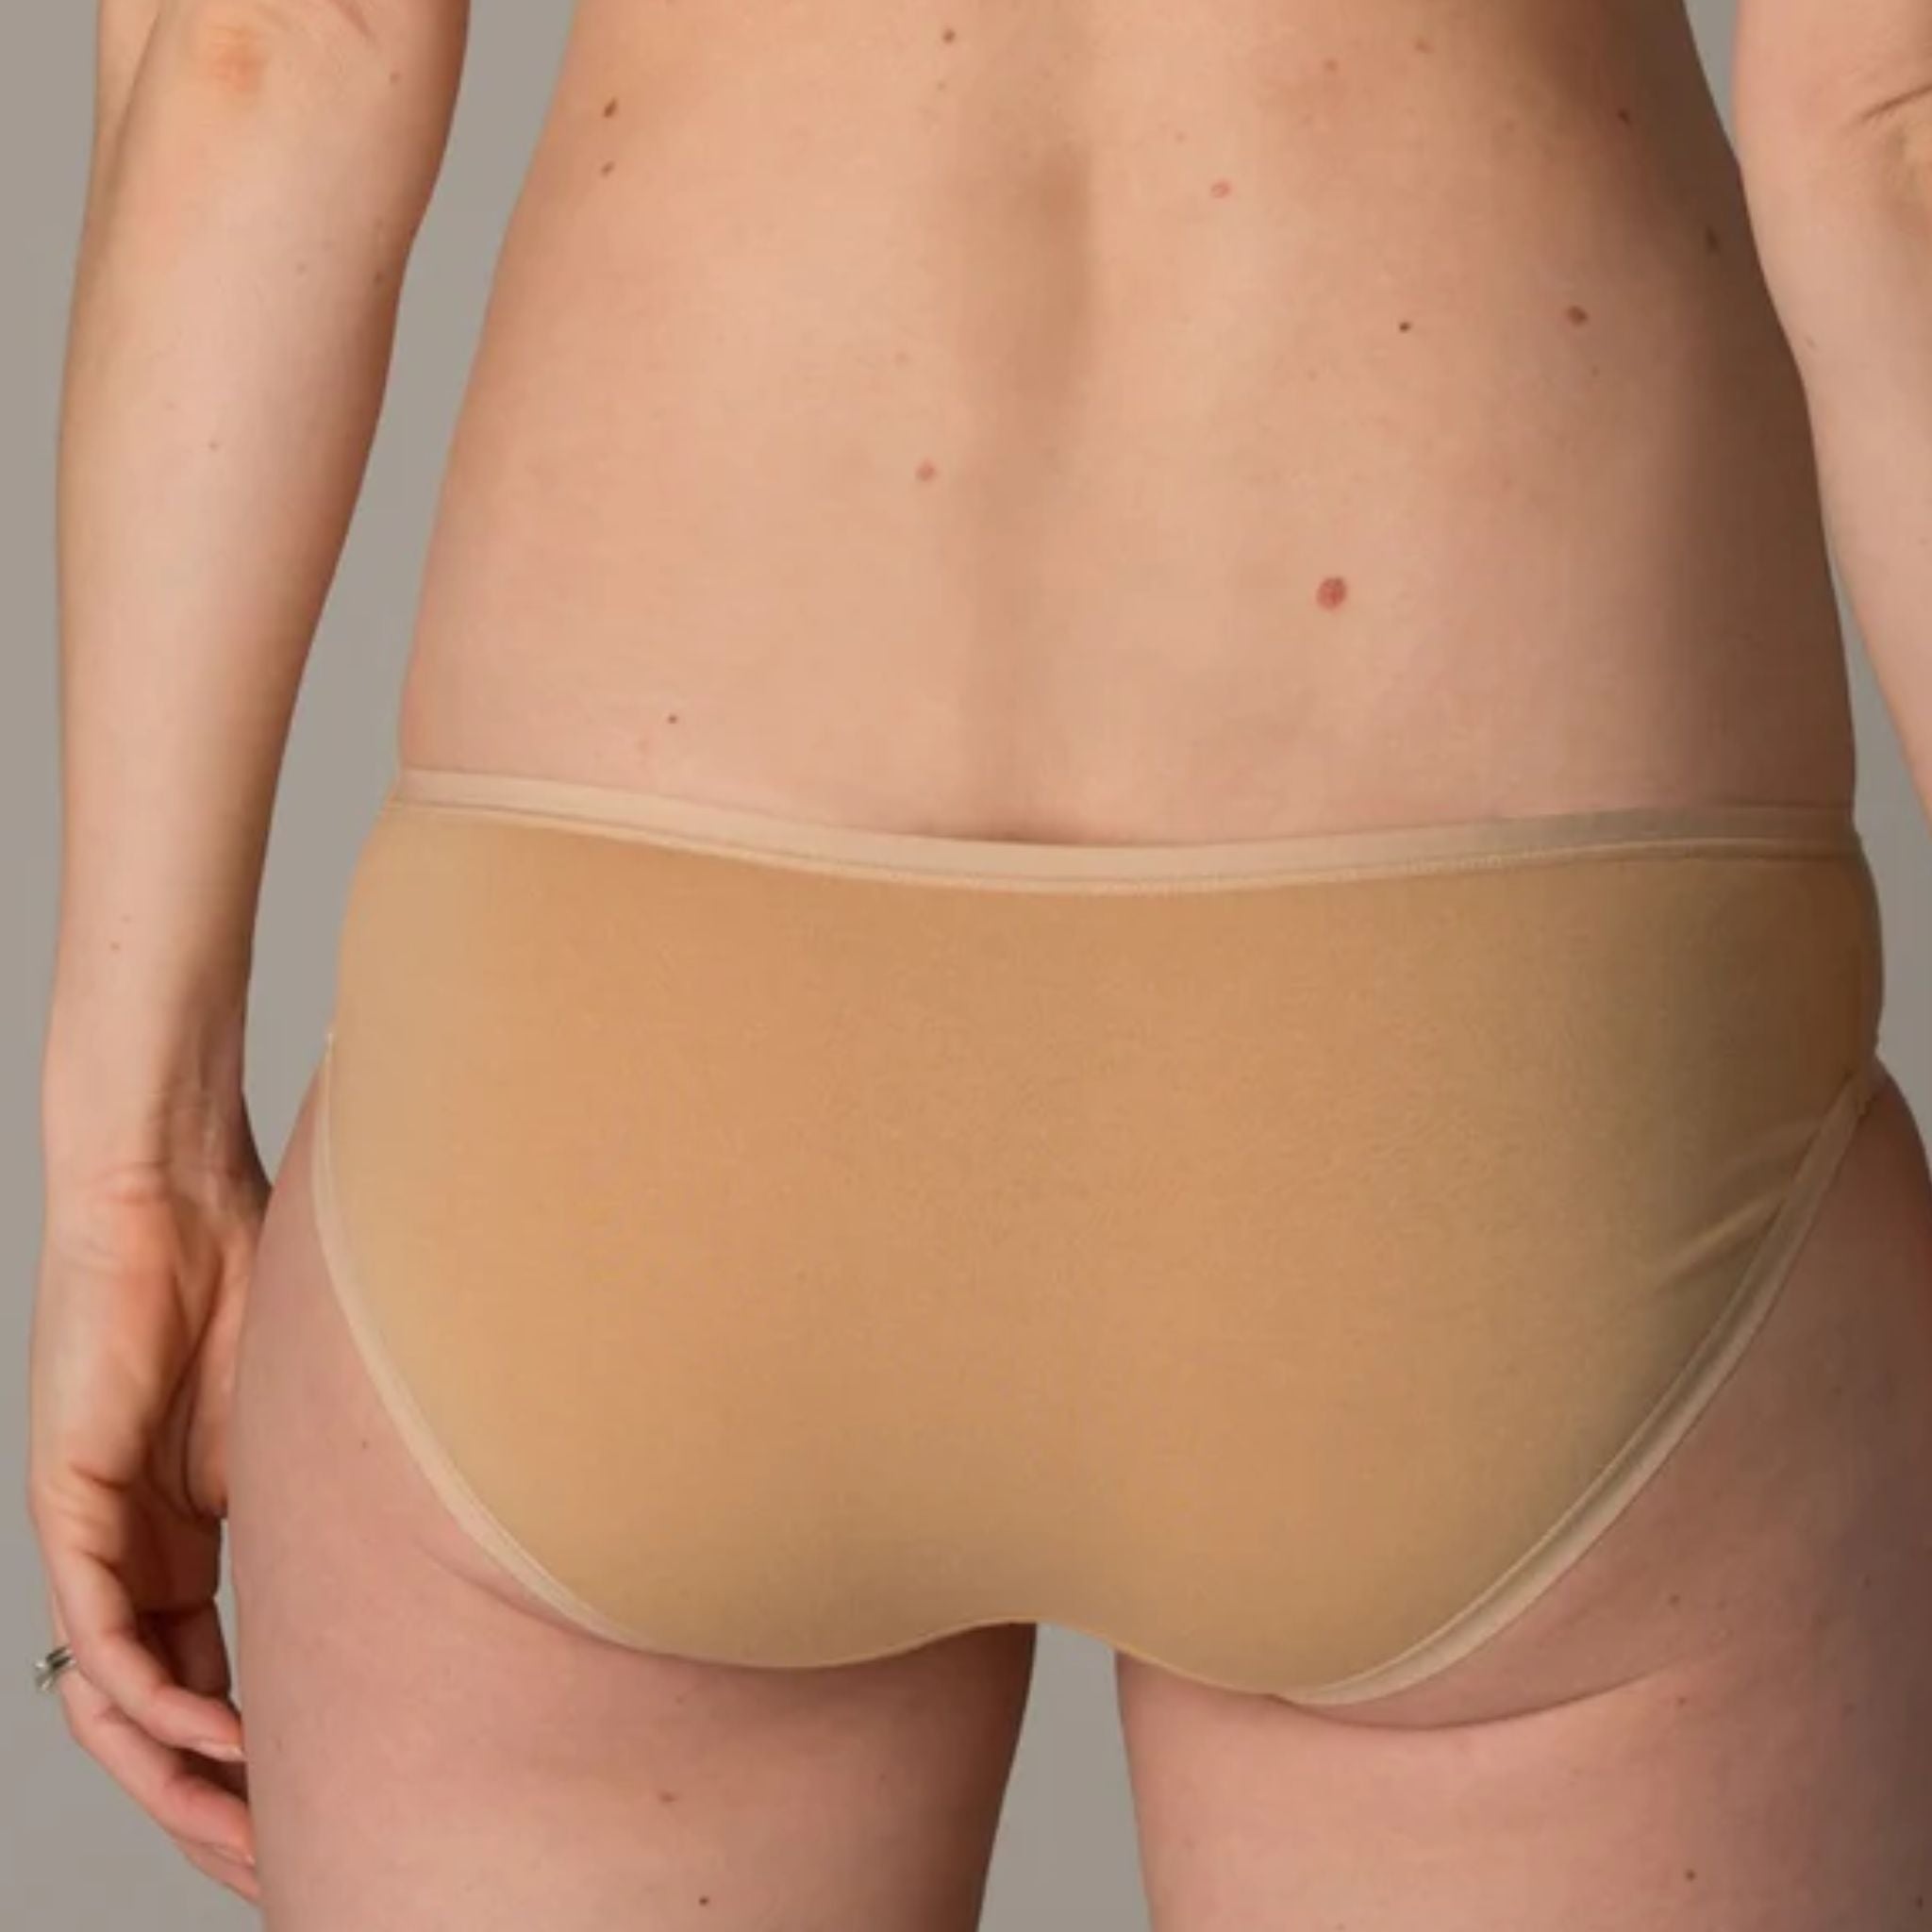 Person wearing almond bikini bottoms, showing back view